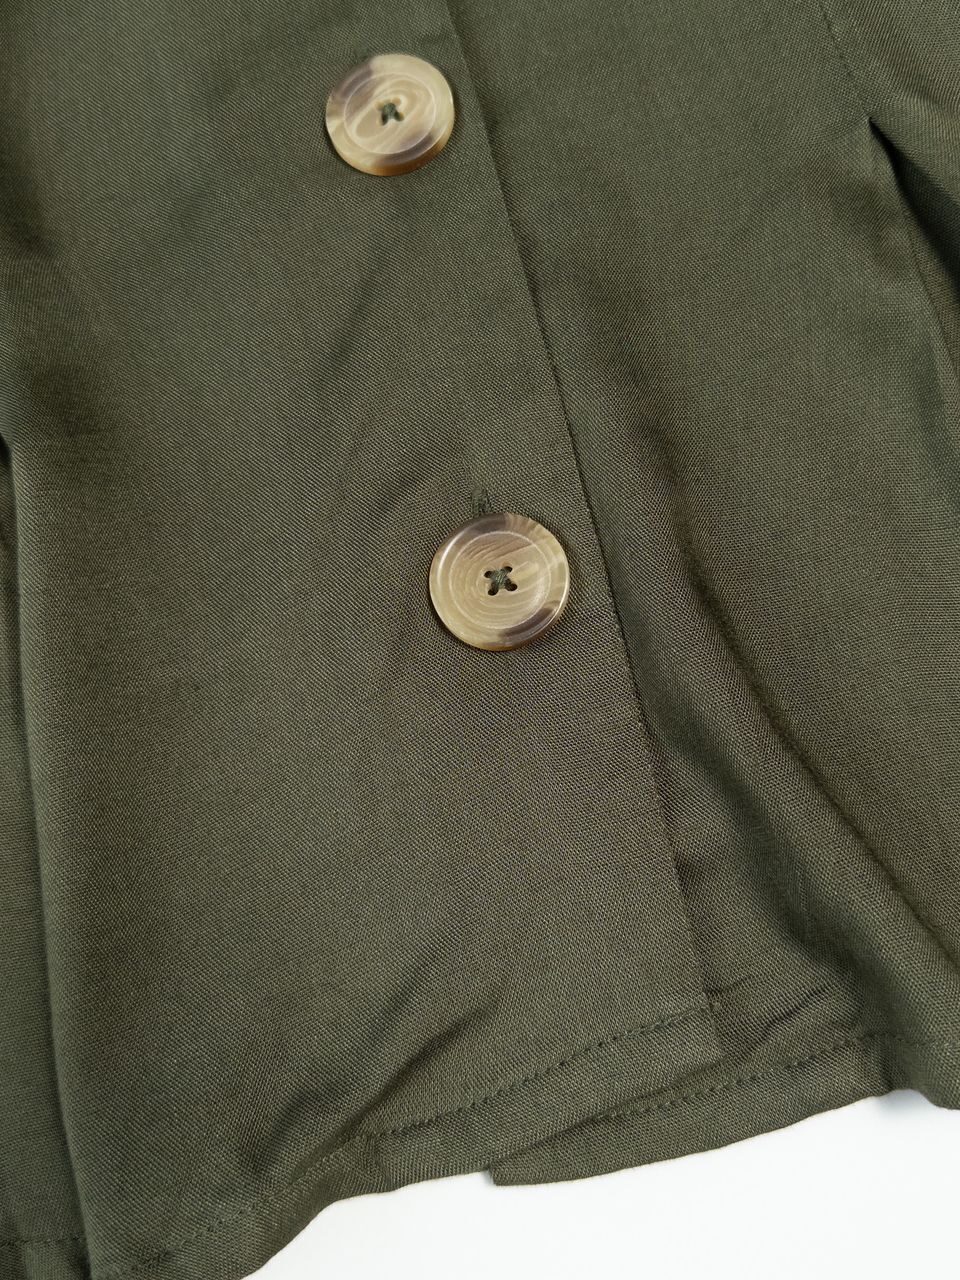 Блуза из вискозы на пуговицах цвет хаки  размер  UK 12 (rus 46) BY VERY